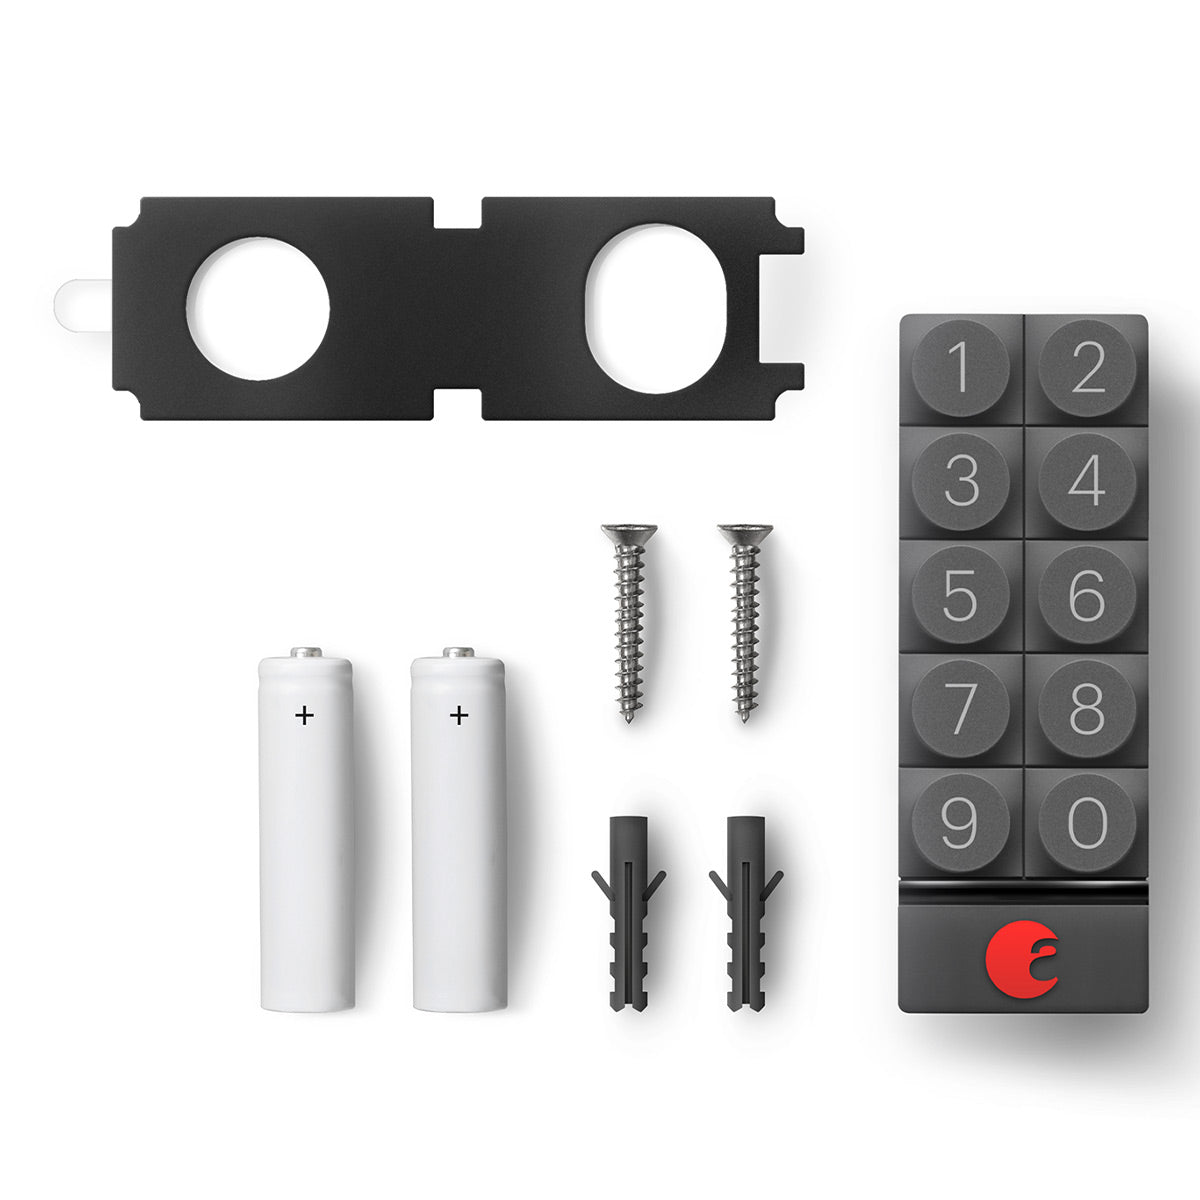 August Home Smart Keypad (Dark Gray)